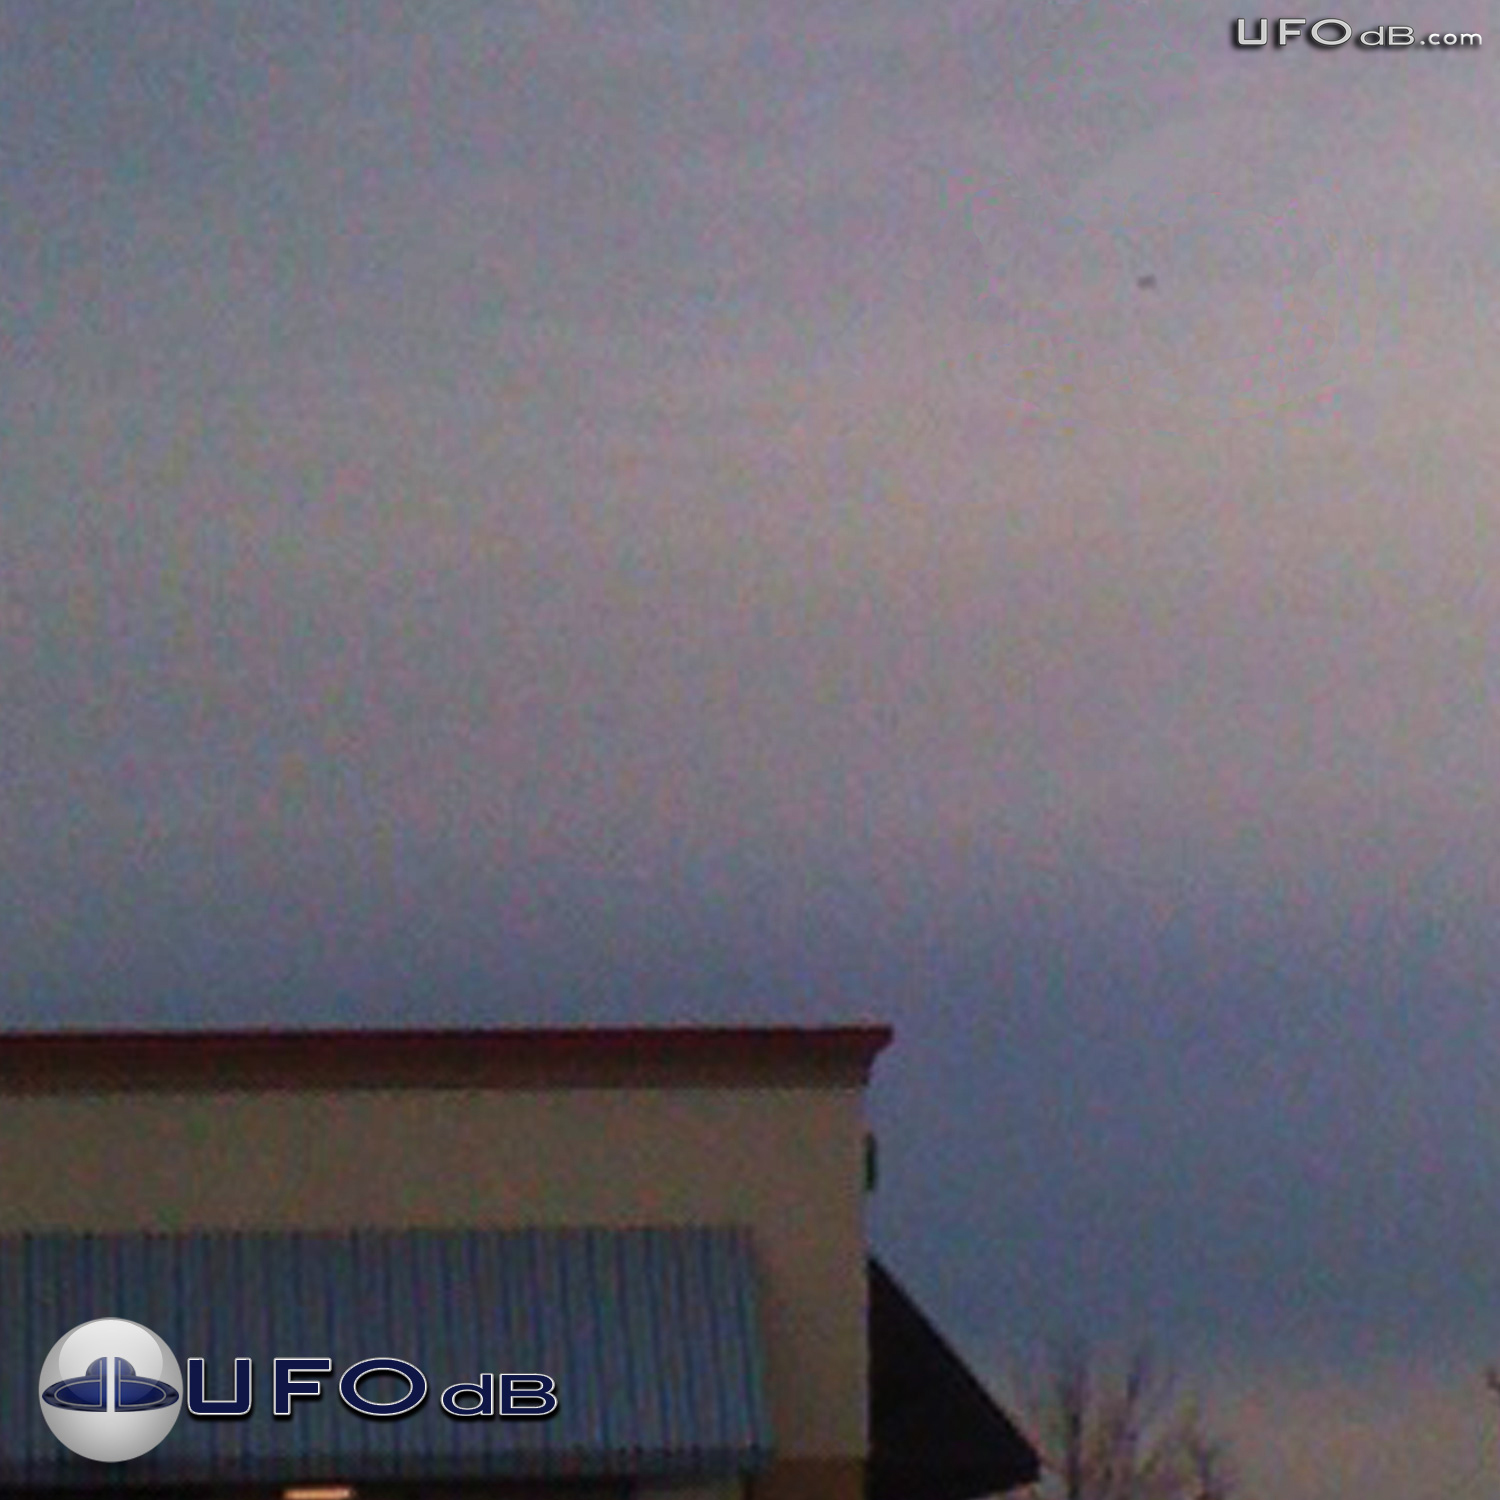 Distant Dark UFO over Alexandria, Virginia | USA | February 20 2011 UFO Picture #292-1